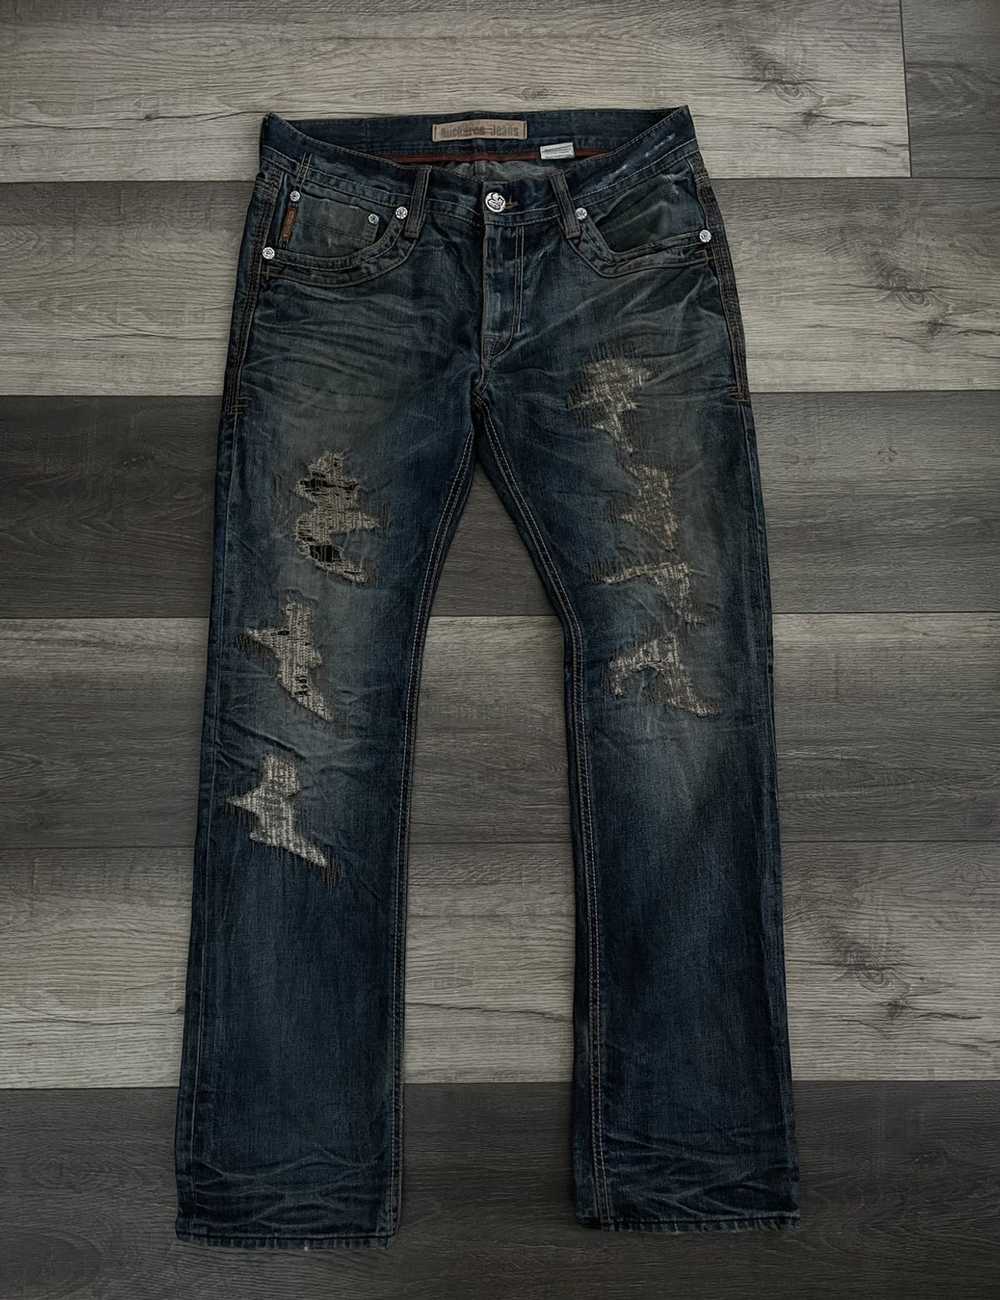 PPFM Buckaroo indigo jeans - image 1